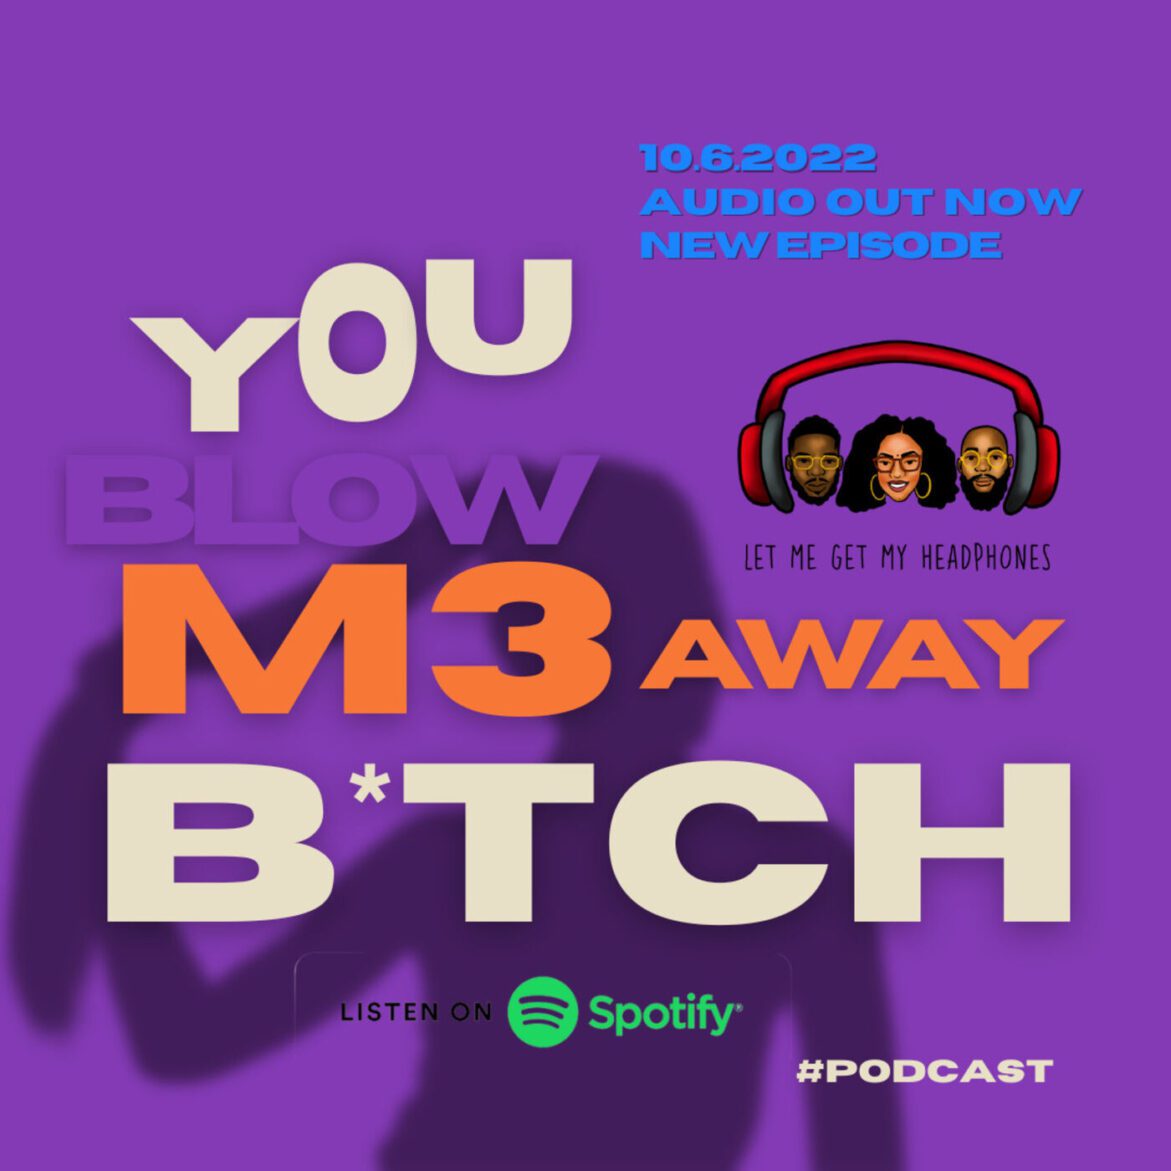 Black Podcasting - You Blow Me Away B*tch